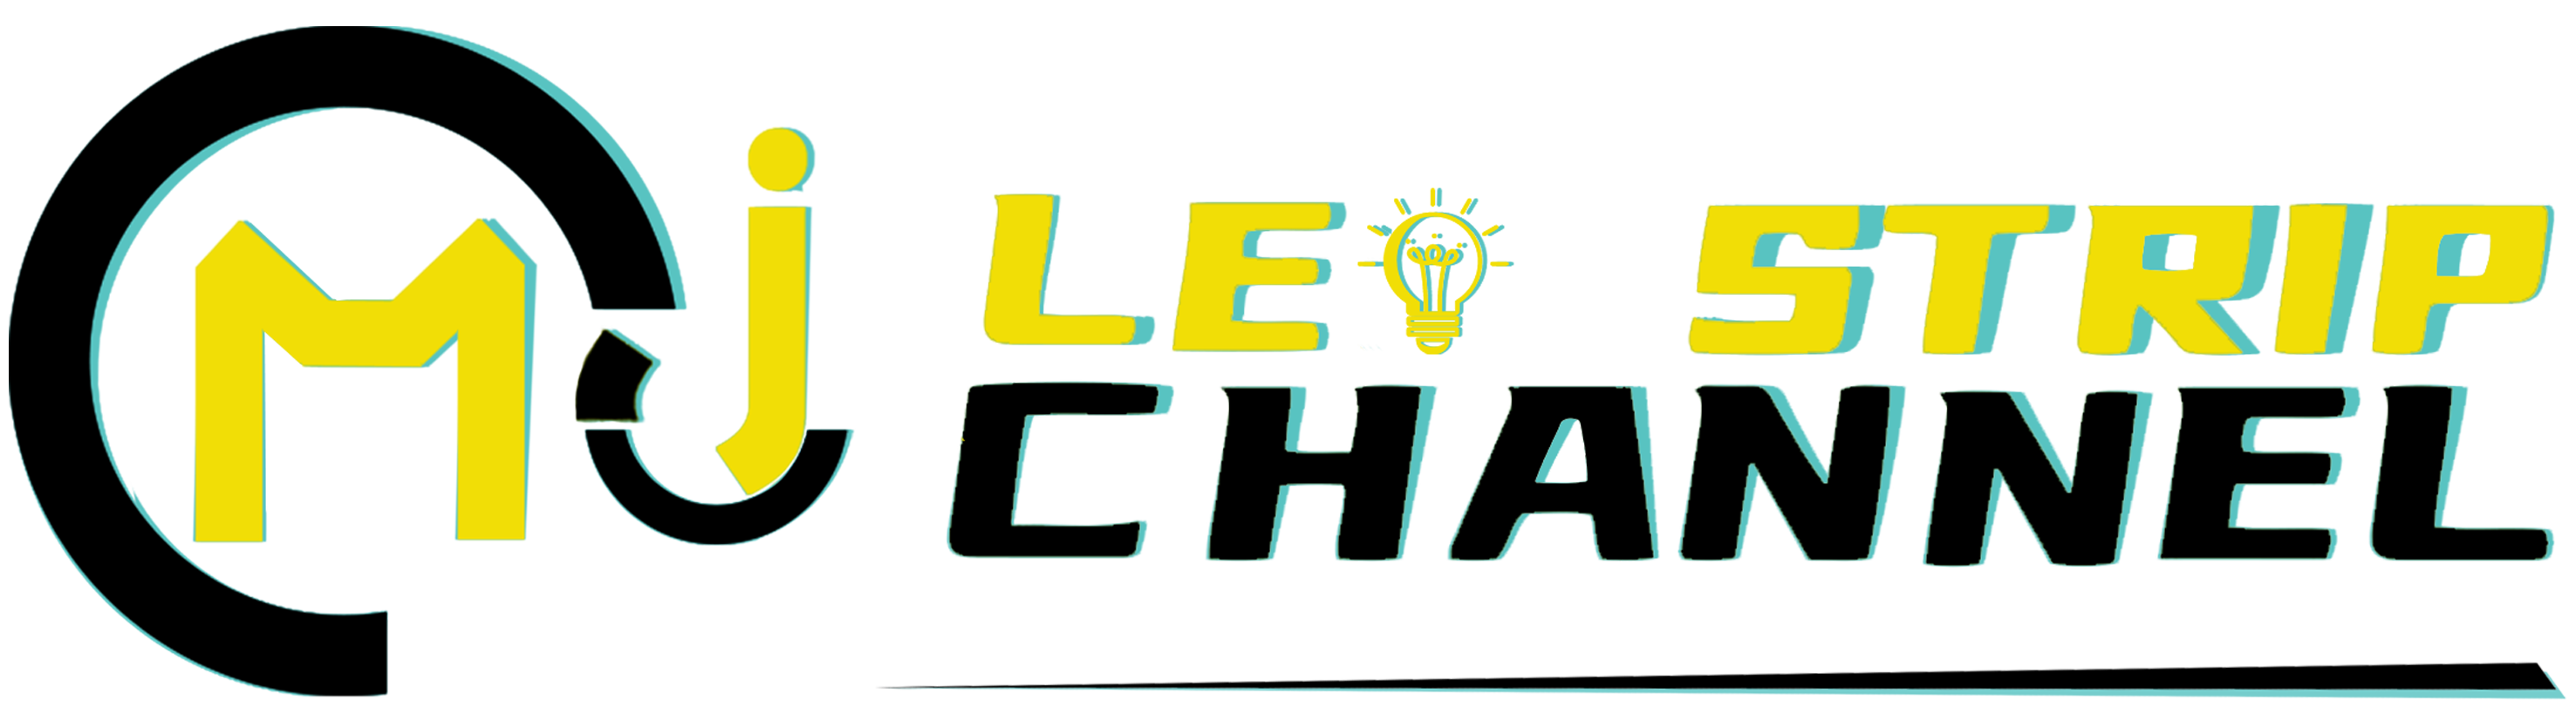 led strip channel